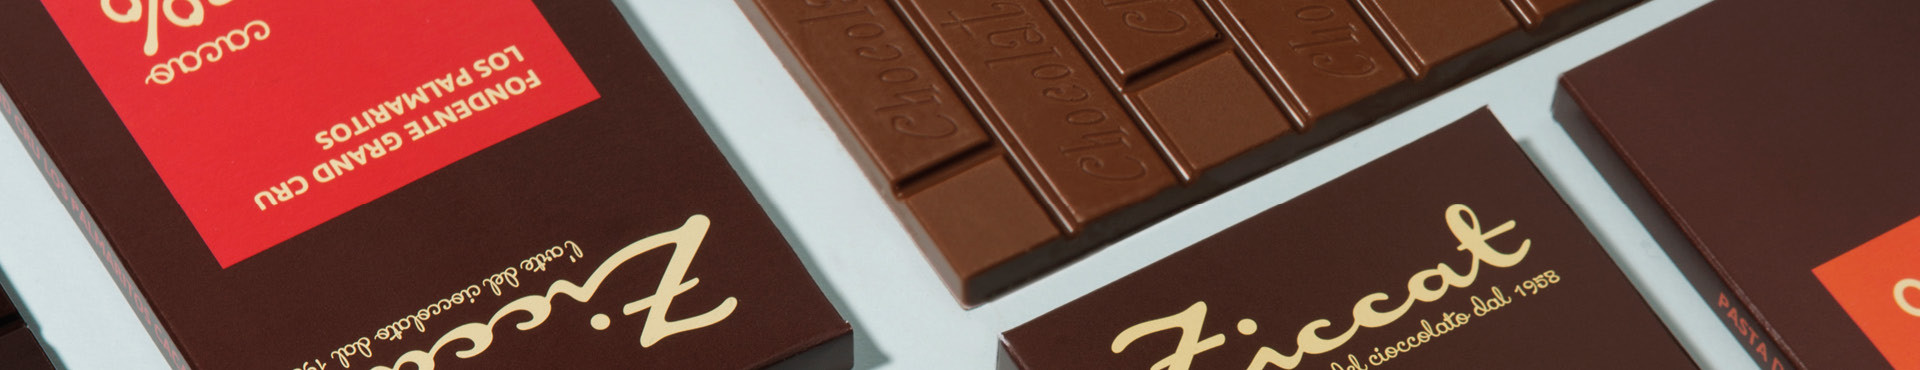 Single Origin Bars of Chocolate